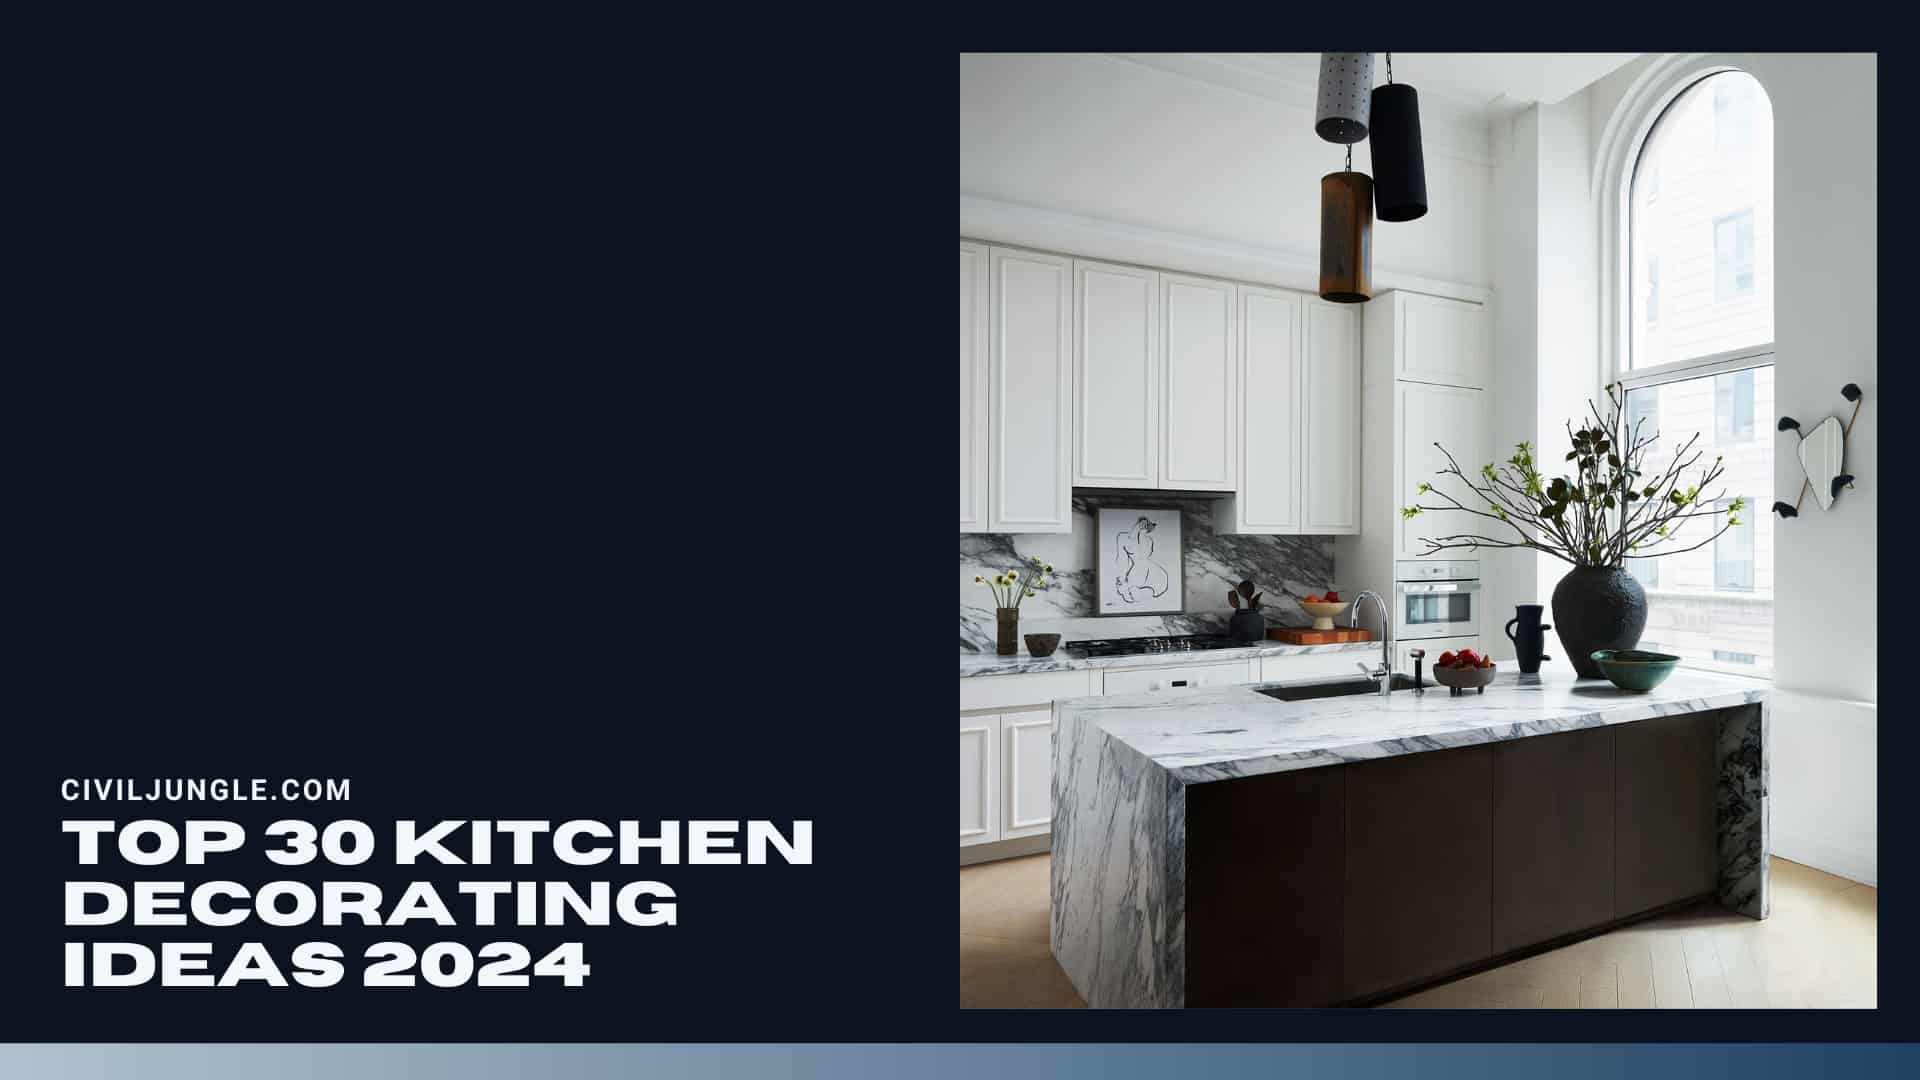 Top 30 Kitchen Decorating Ideas 2024